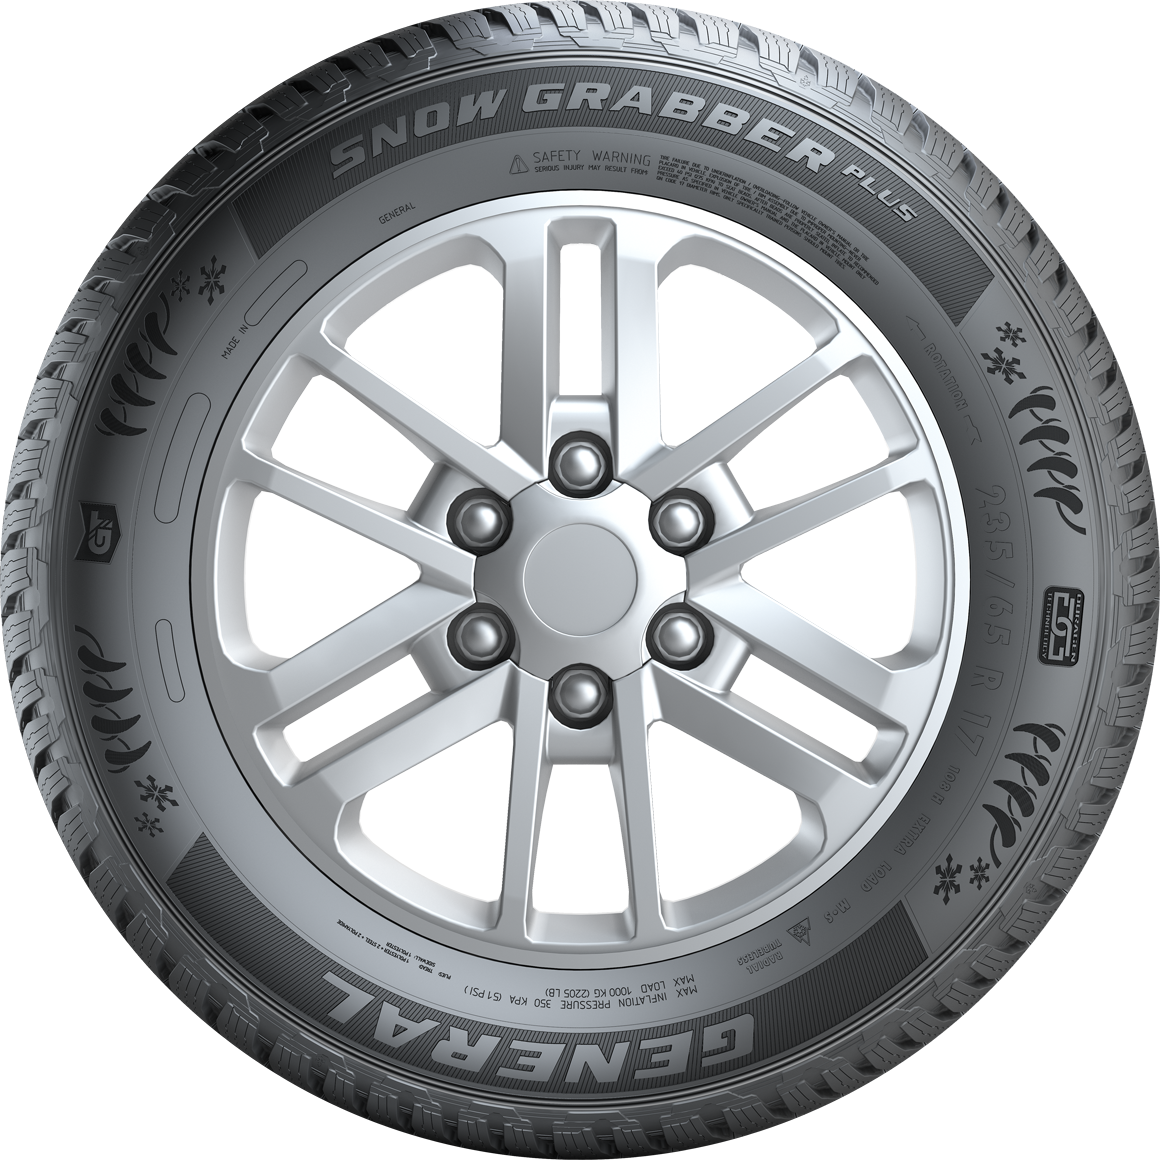 General Tire Snow Grabber Plus 225/70R16 103H - KolayOto